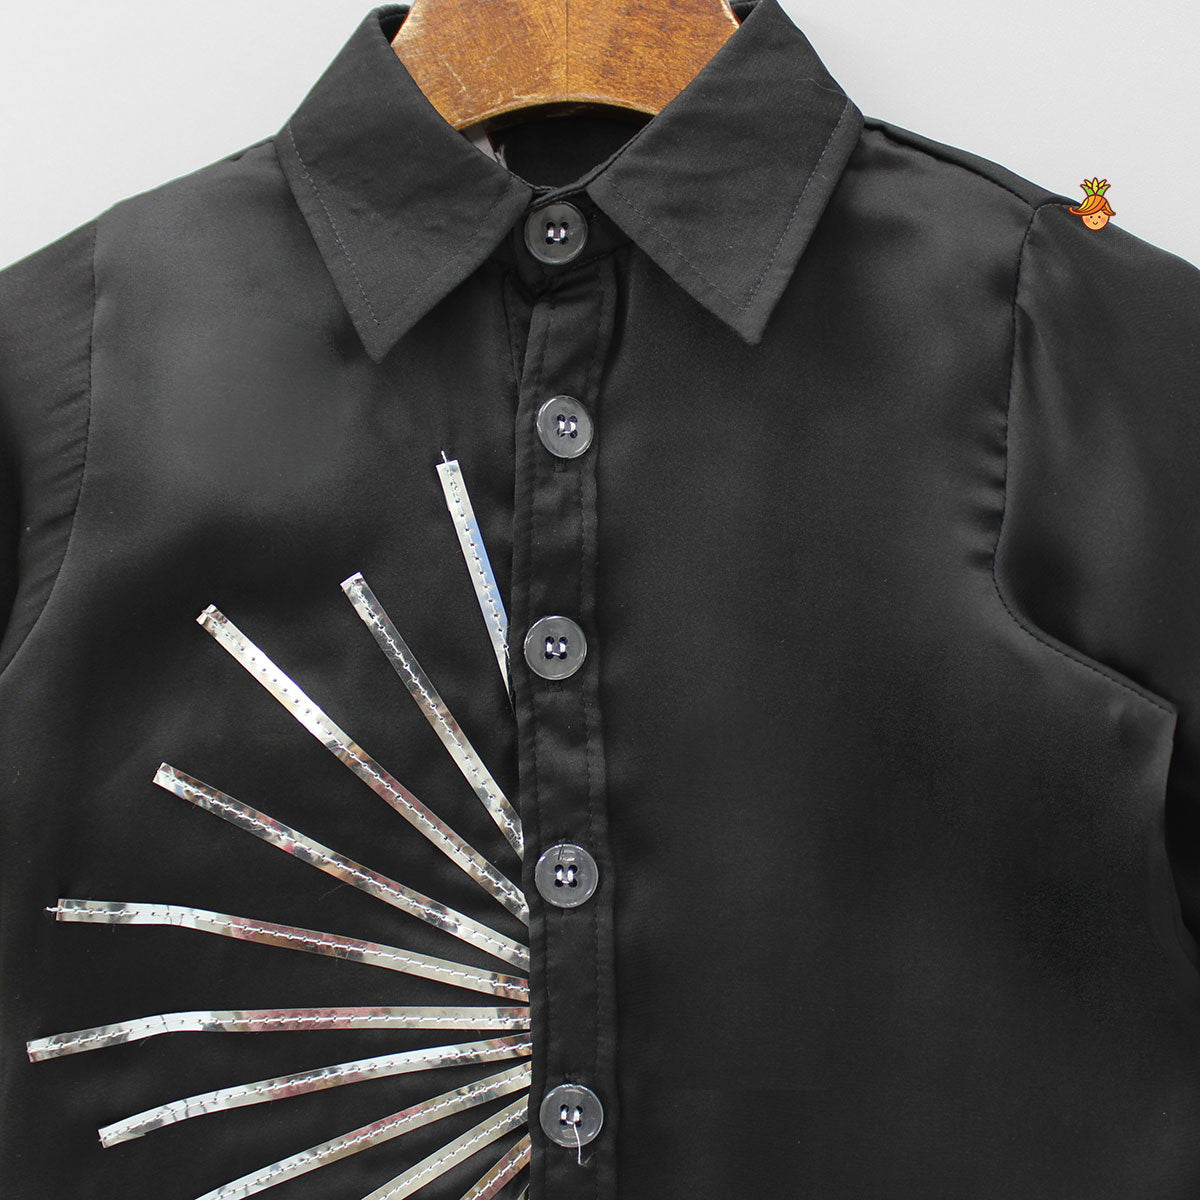 Collar Neck Stripes Detailed Black Shirt